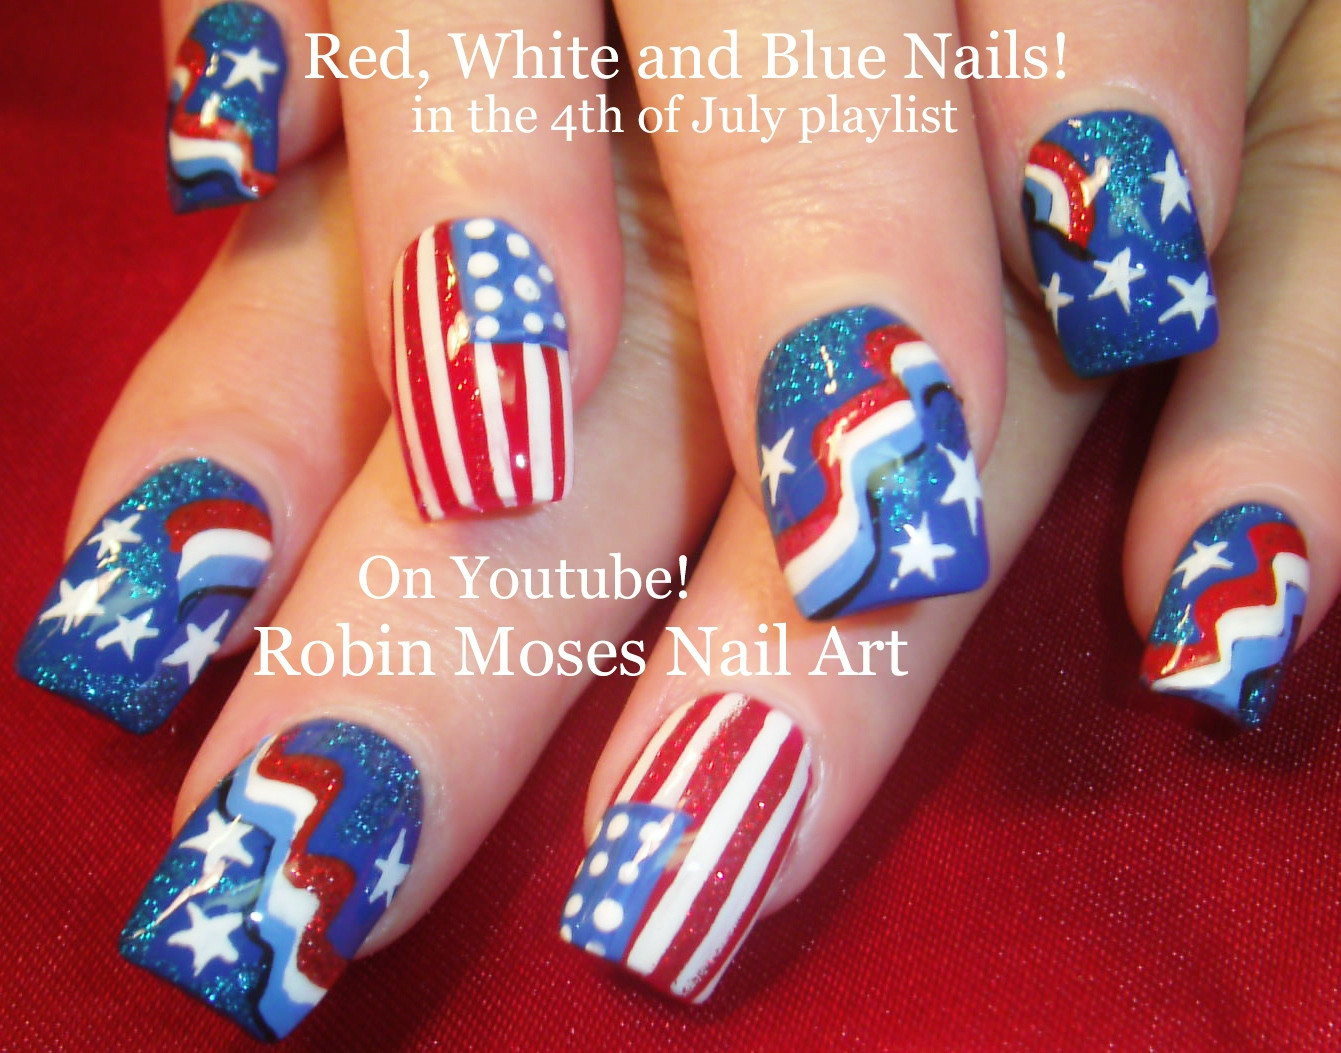 Red White And Blue Nail Art Designs
 Nail Art by Robin Moses 4TH OF JULY Nail Tutorial UP